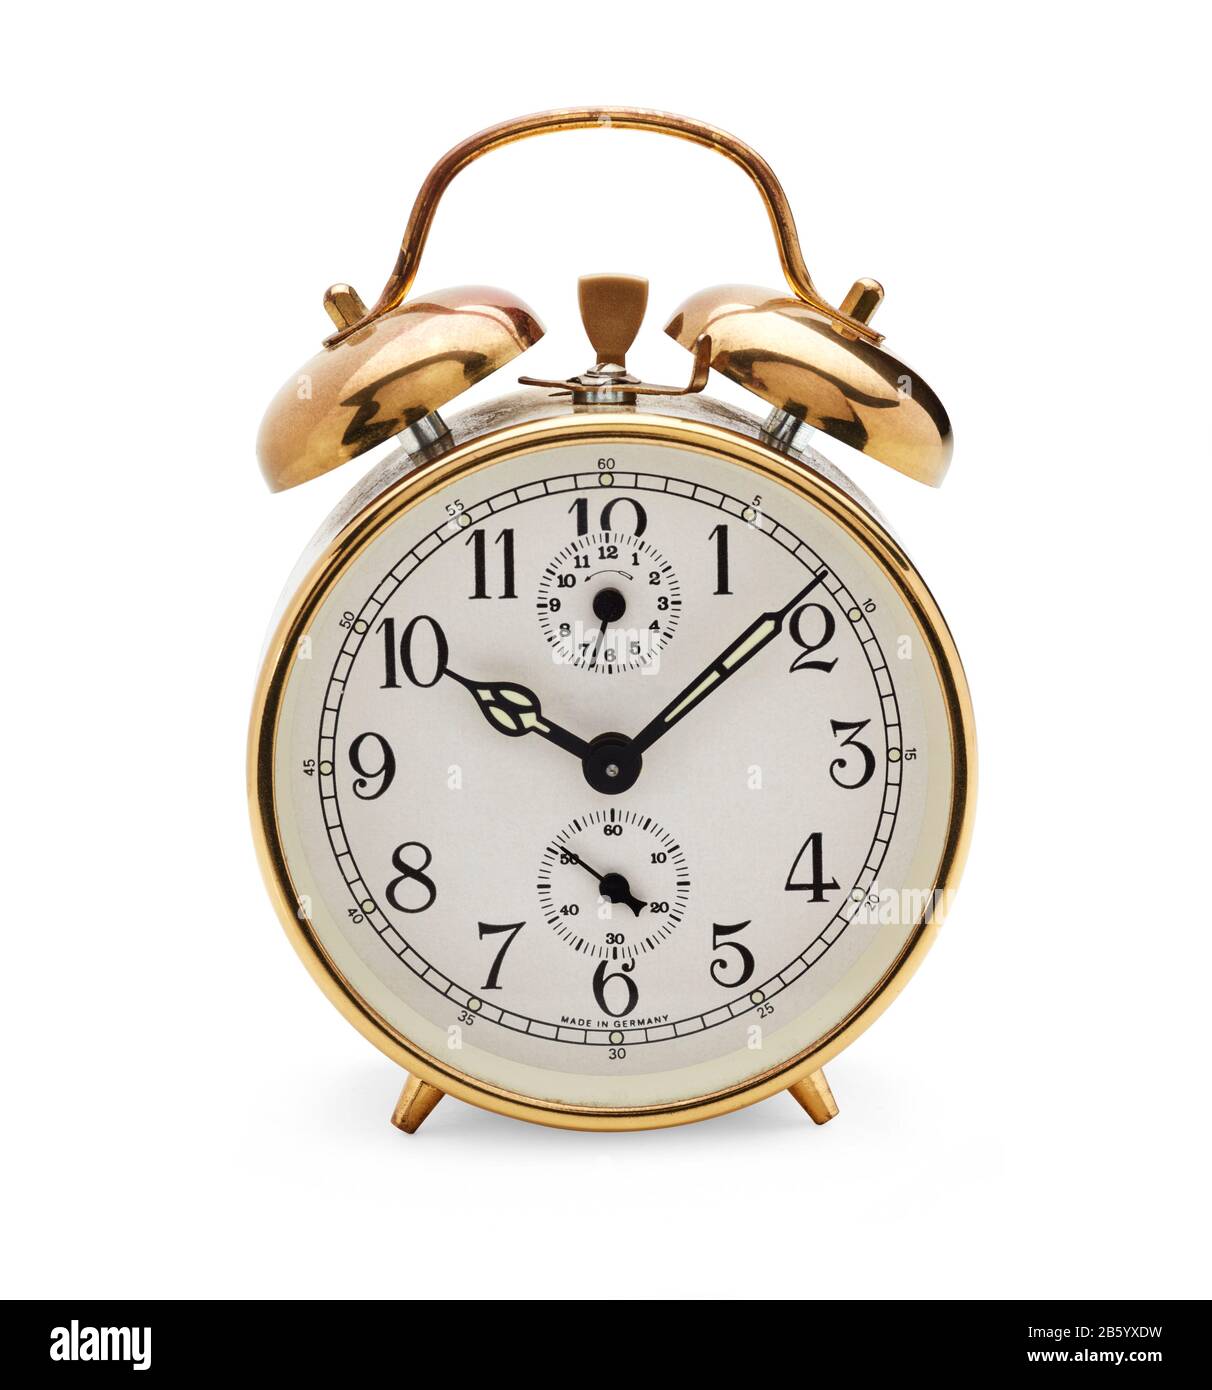 GENERICO Reloj Despertador Metalico Antiguo Con Doble Campana Negro